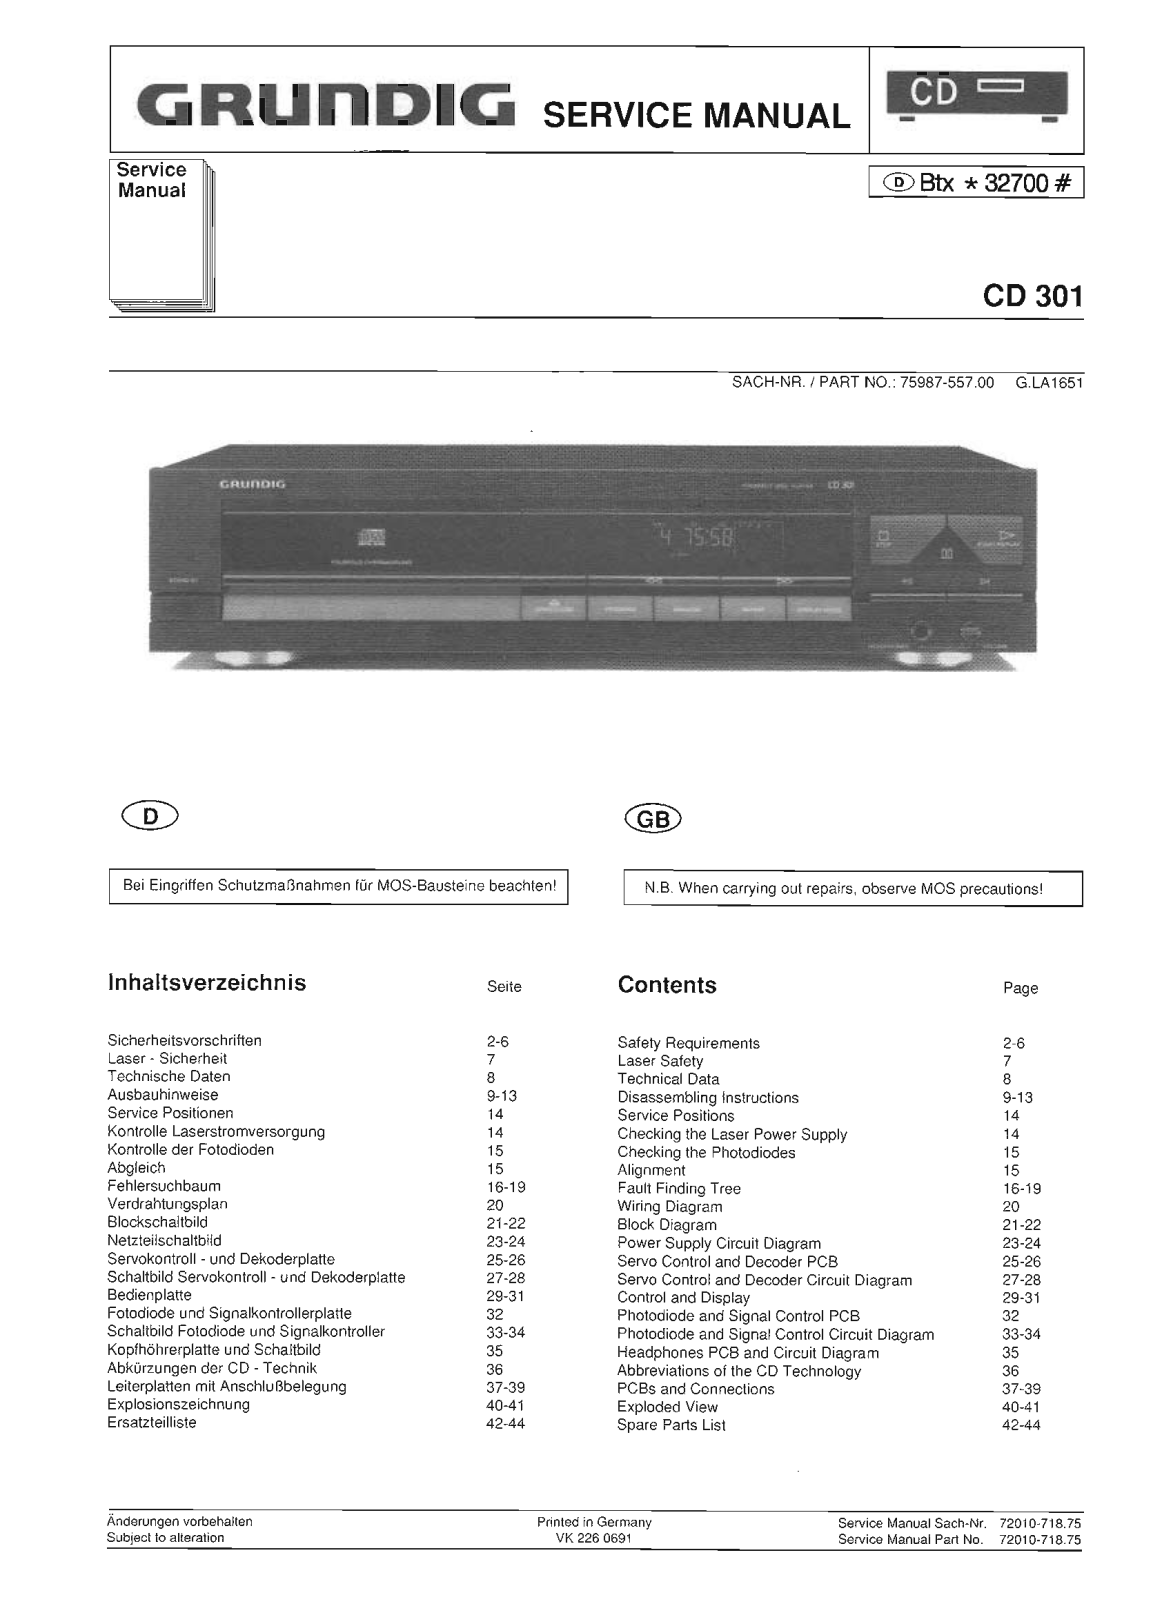 Grundig CD-301 Service Manual